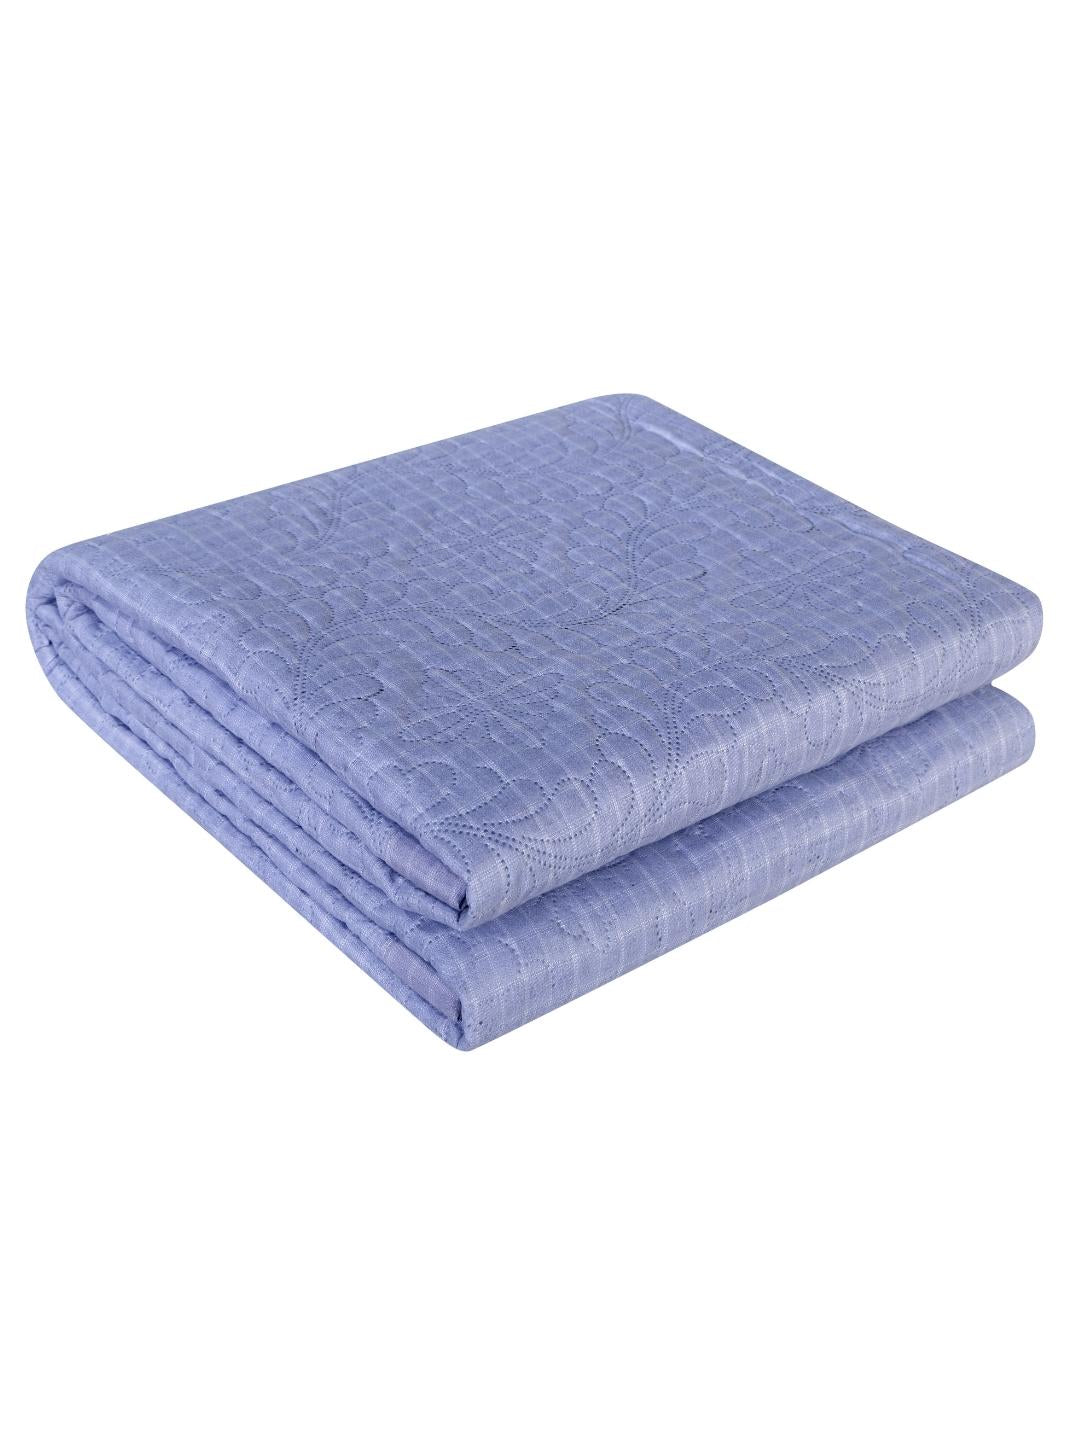 Floral Print Set of 2 Single Bed Light Weight Comforter- Navy Blue